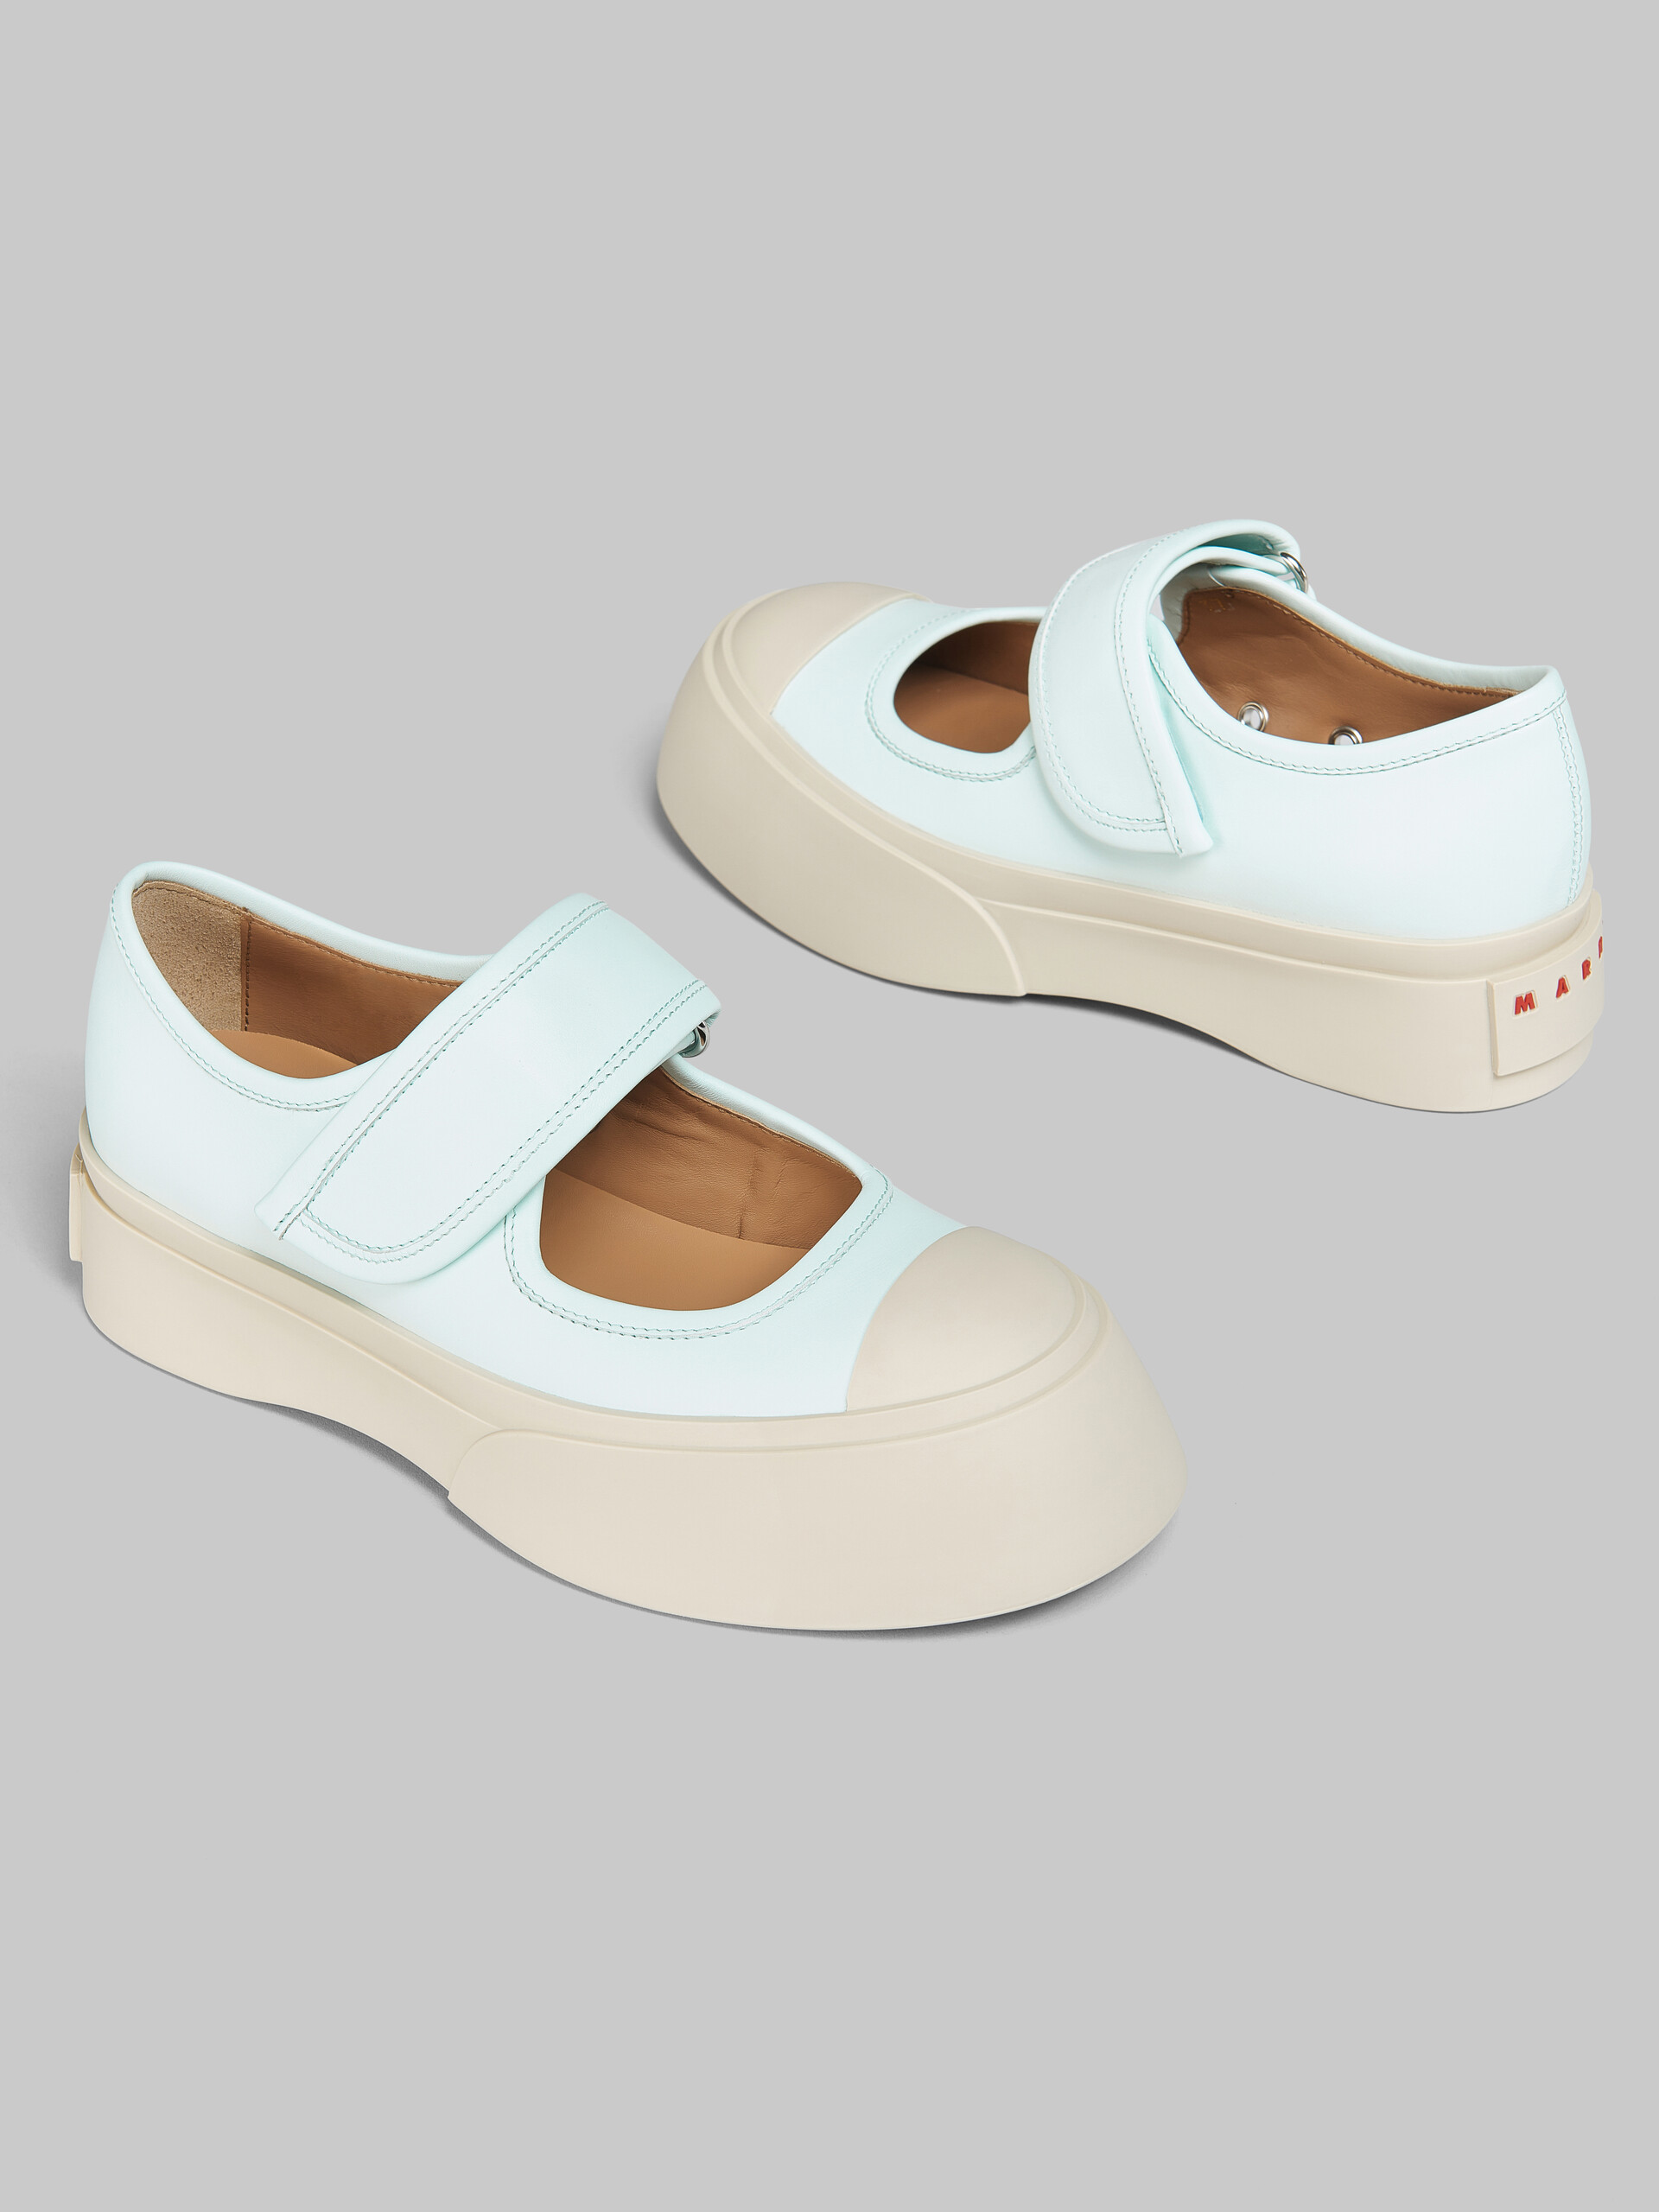 Ryka Adjustable Mesh Mary Jane Sneakers - Kailee Palm - QVC.com